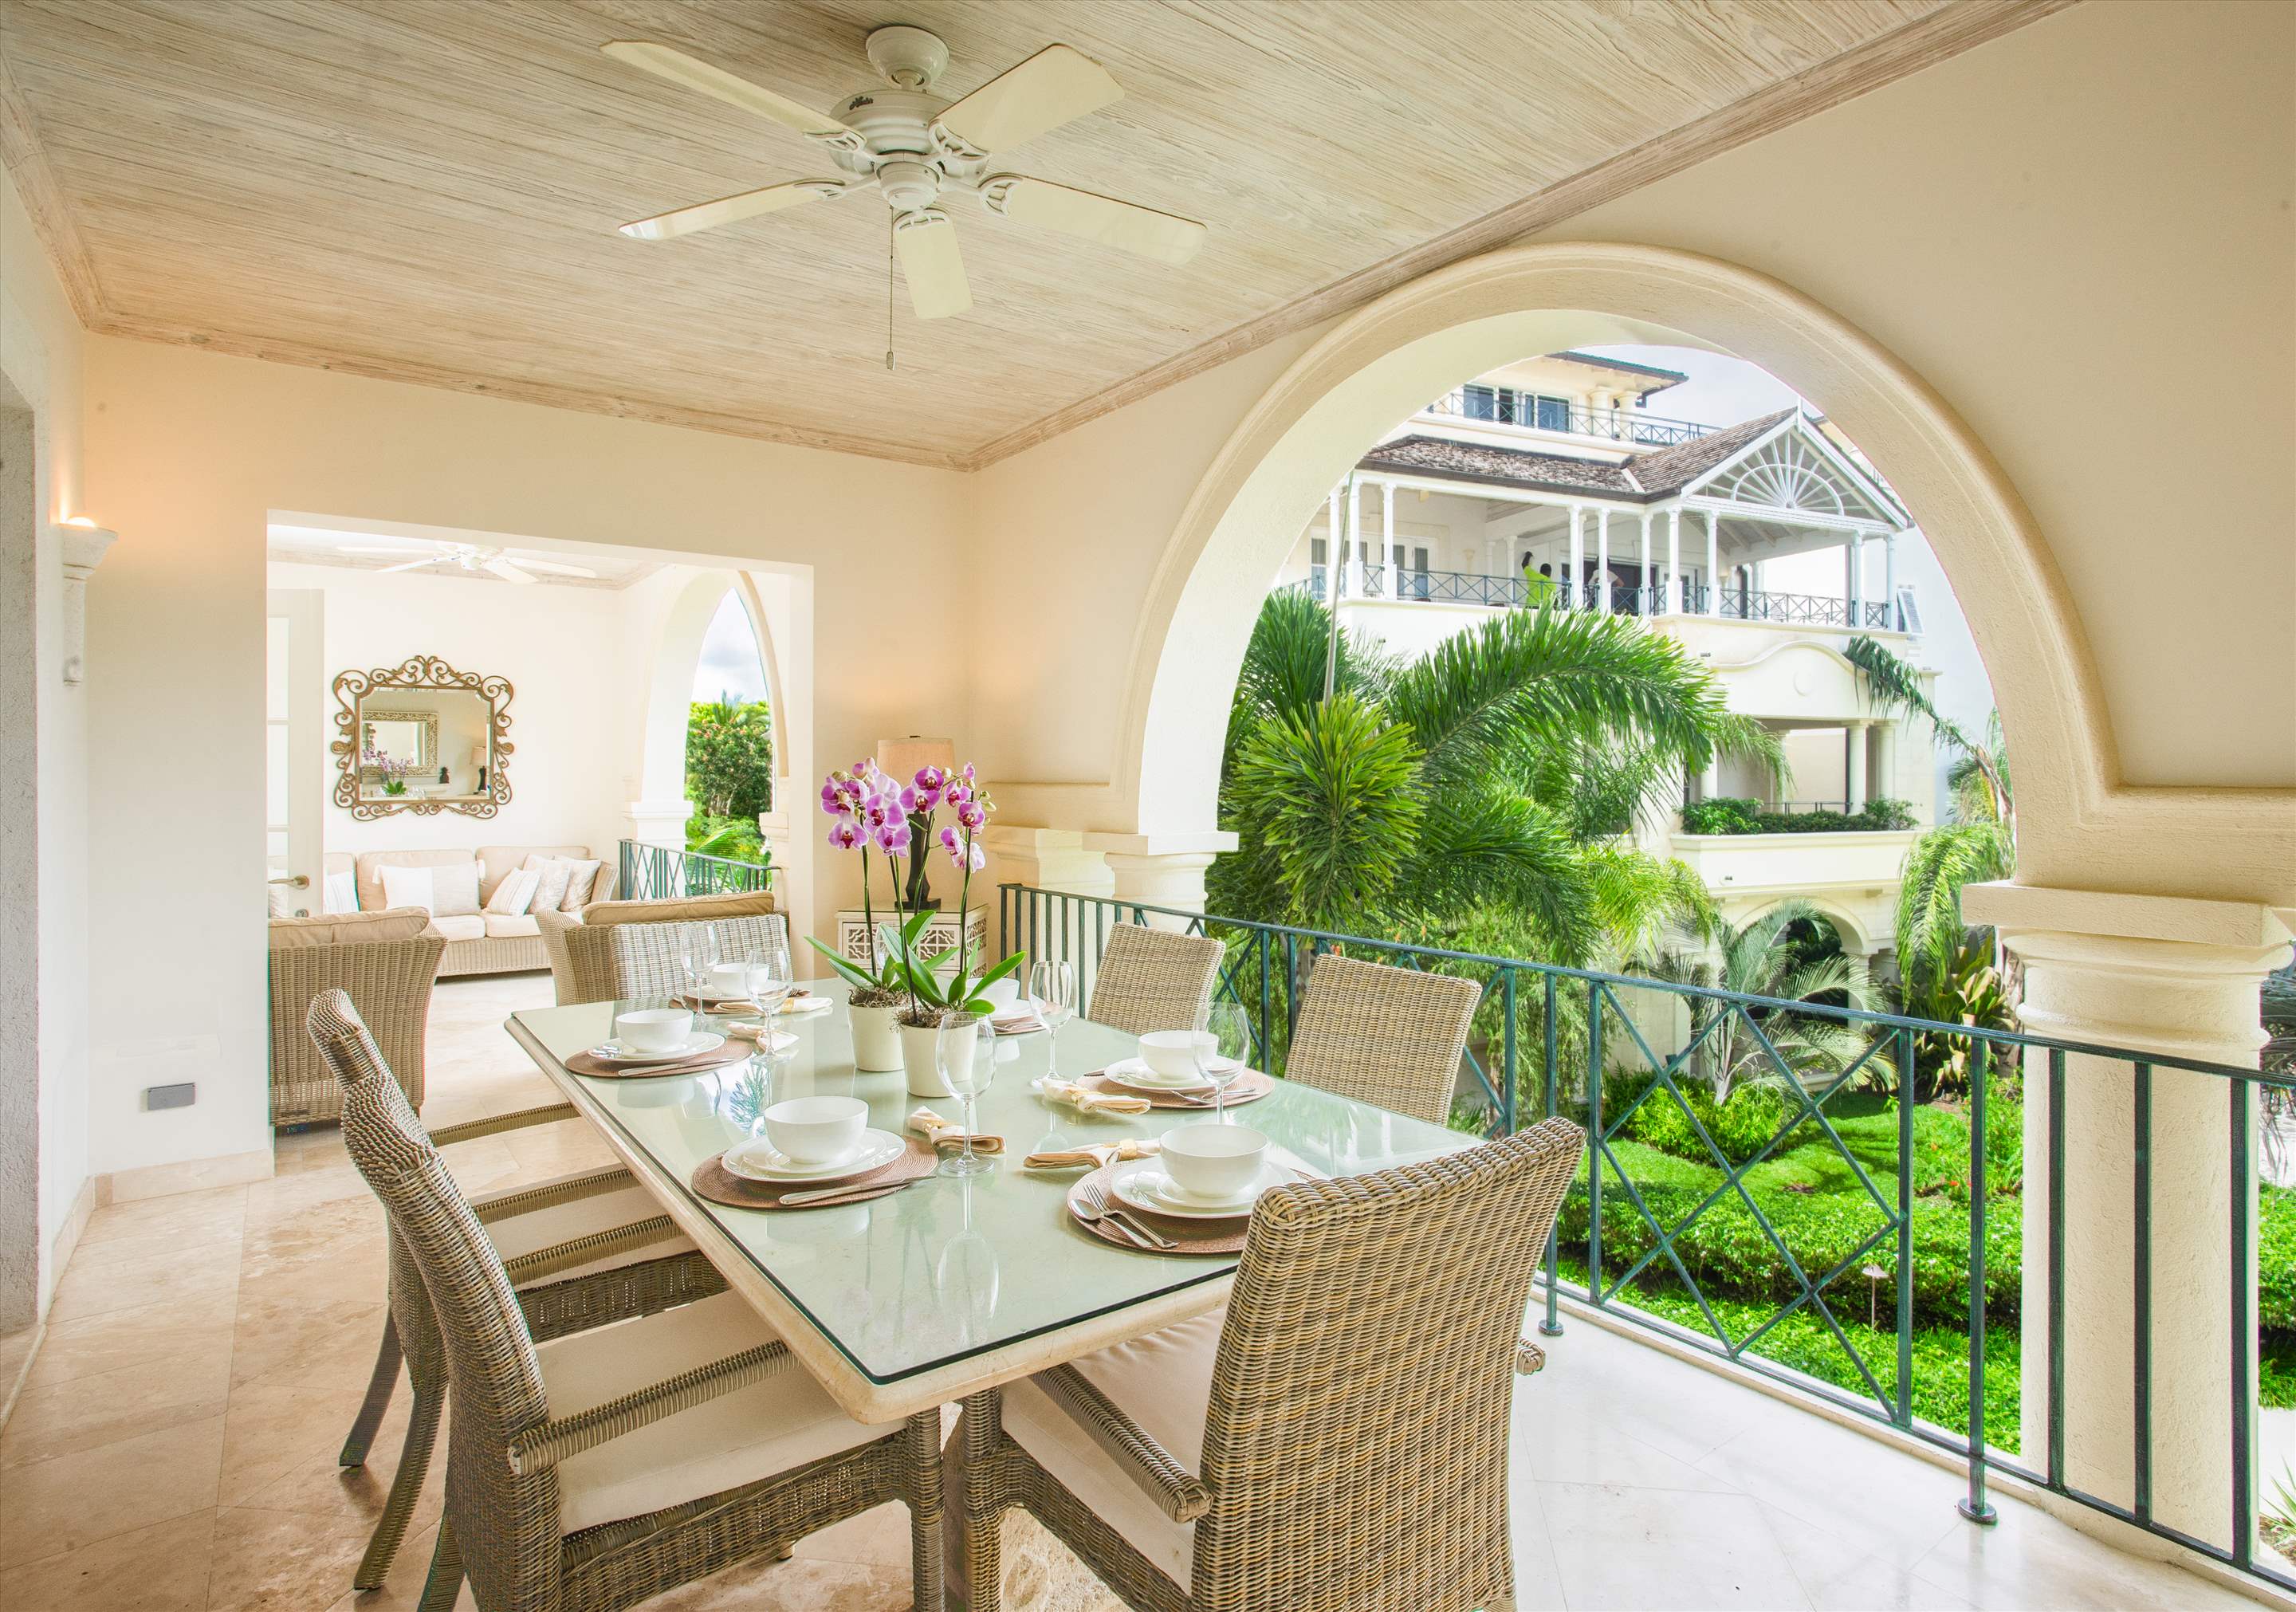 Schooner Bay 205, One Bedroom rate, 1 bedroom apartment in St. James & West Coast, Barbados Photo #2